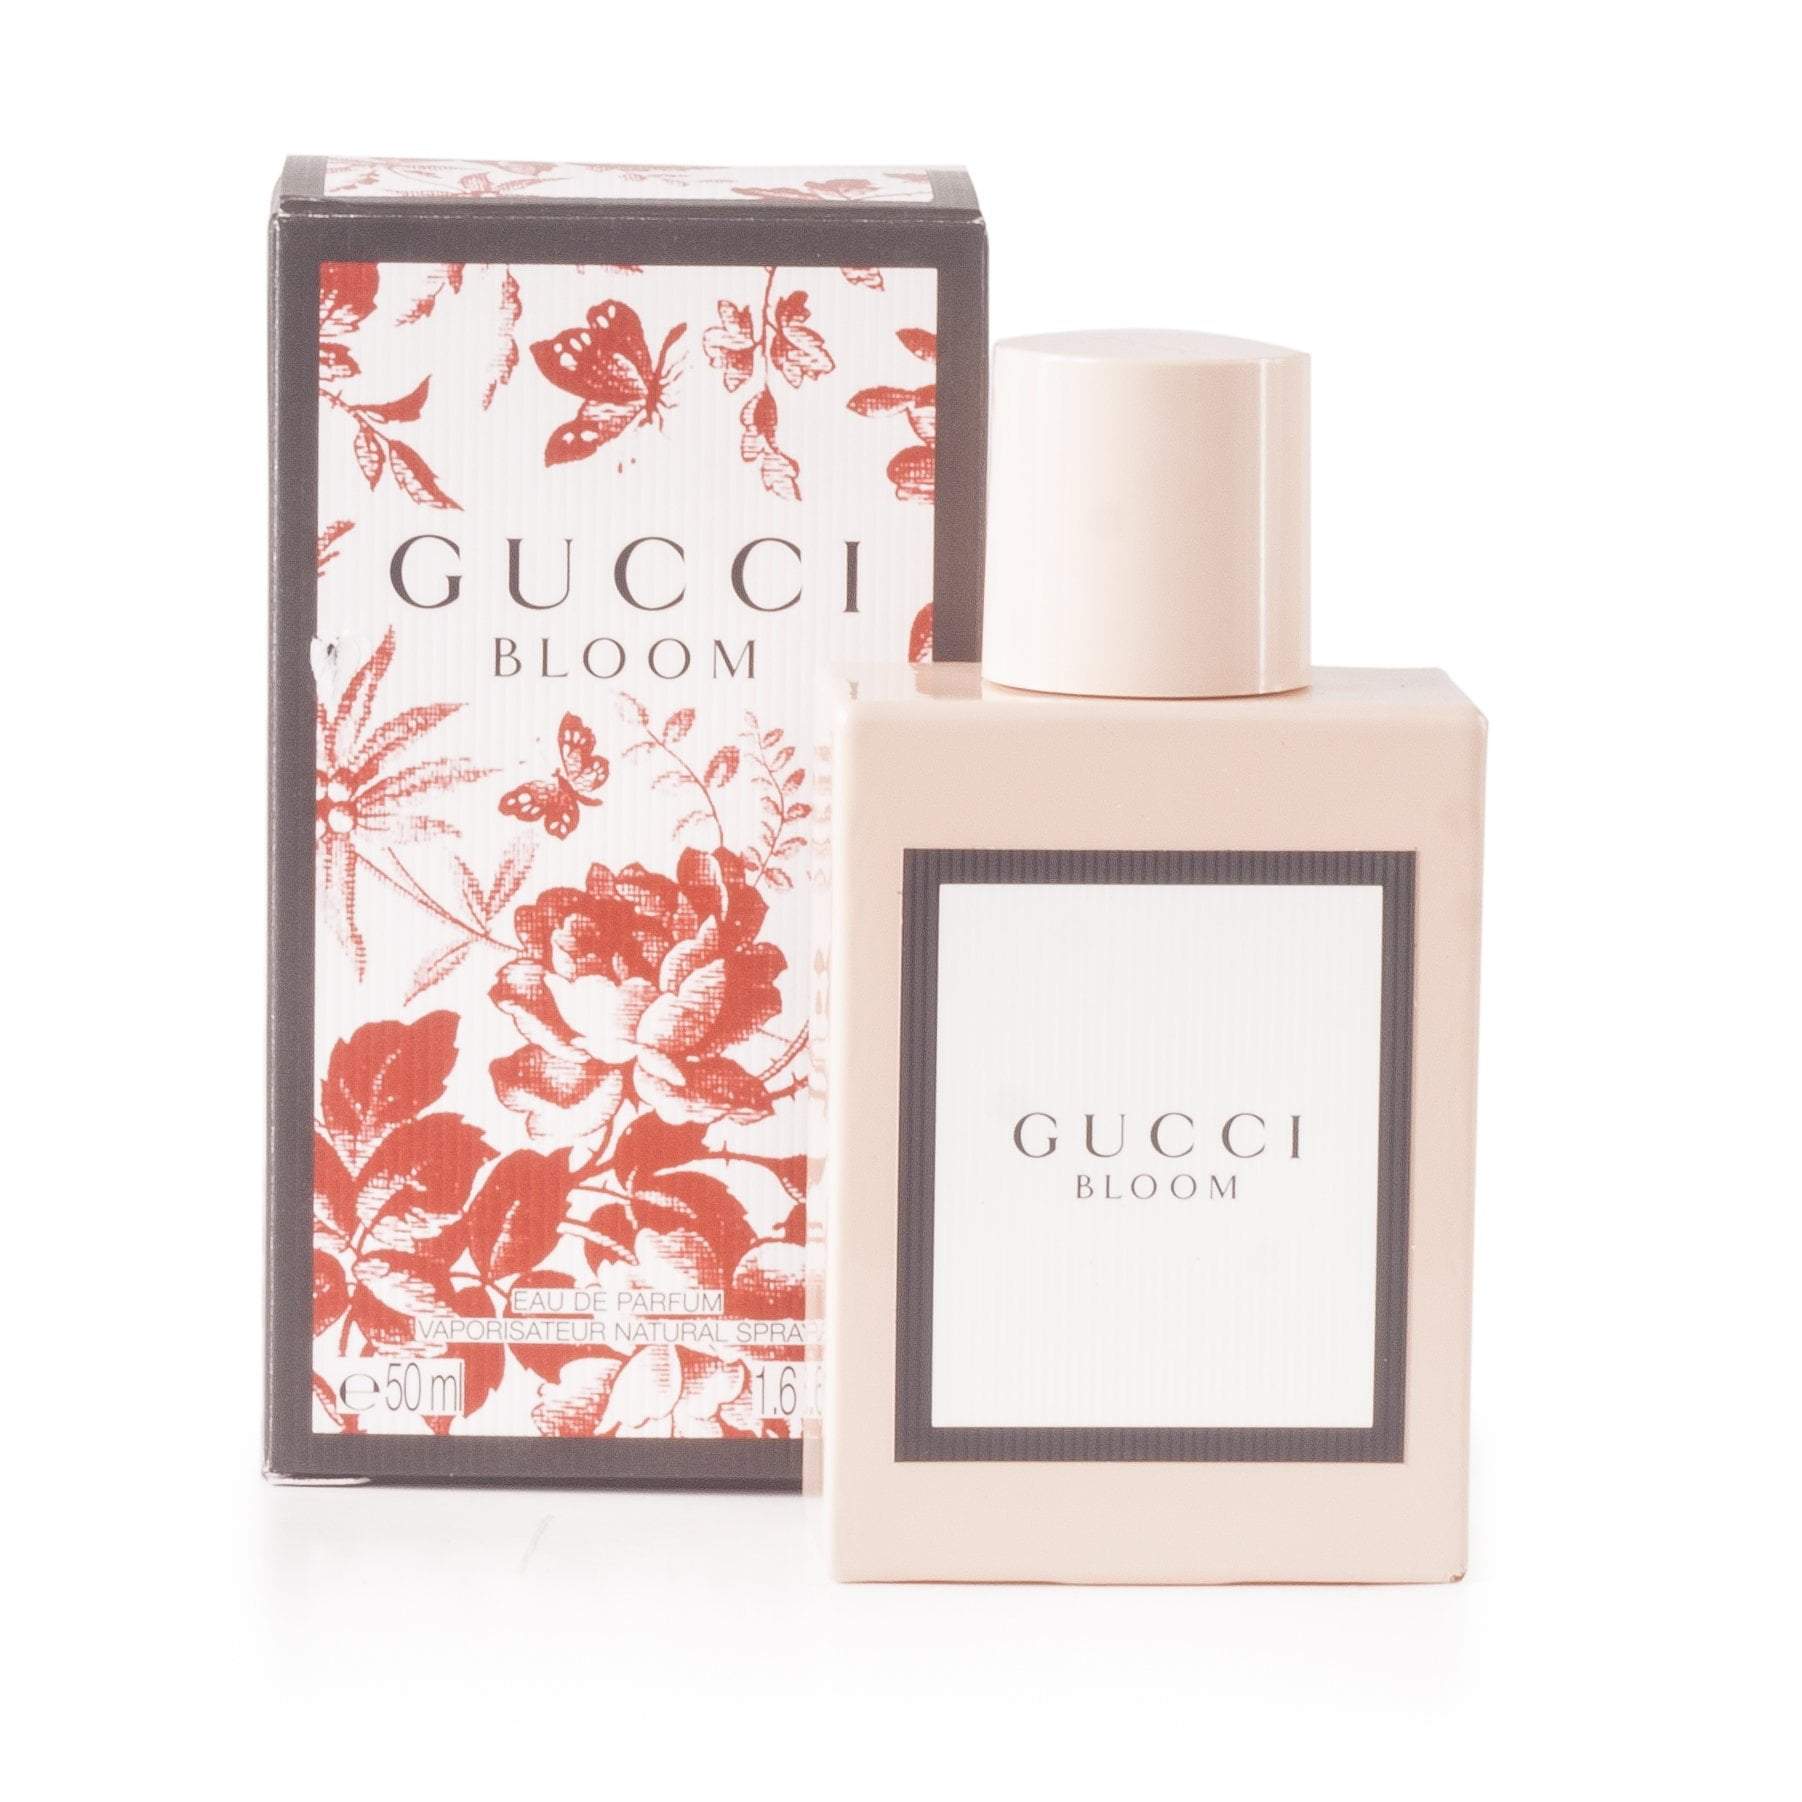 Gucci Bloom Eau de Parfum Spray for Women by Gucci, Product image 3